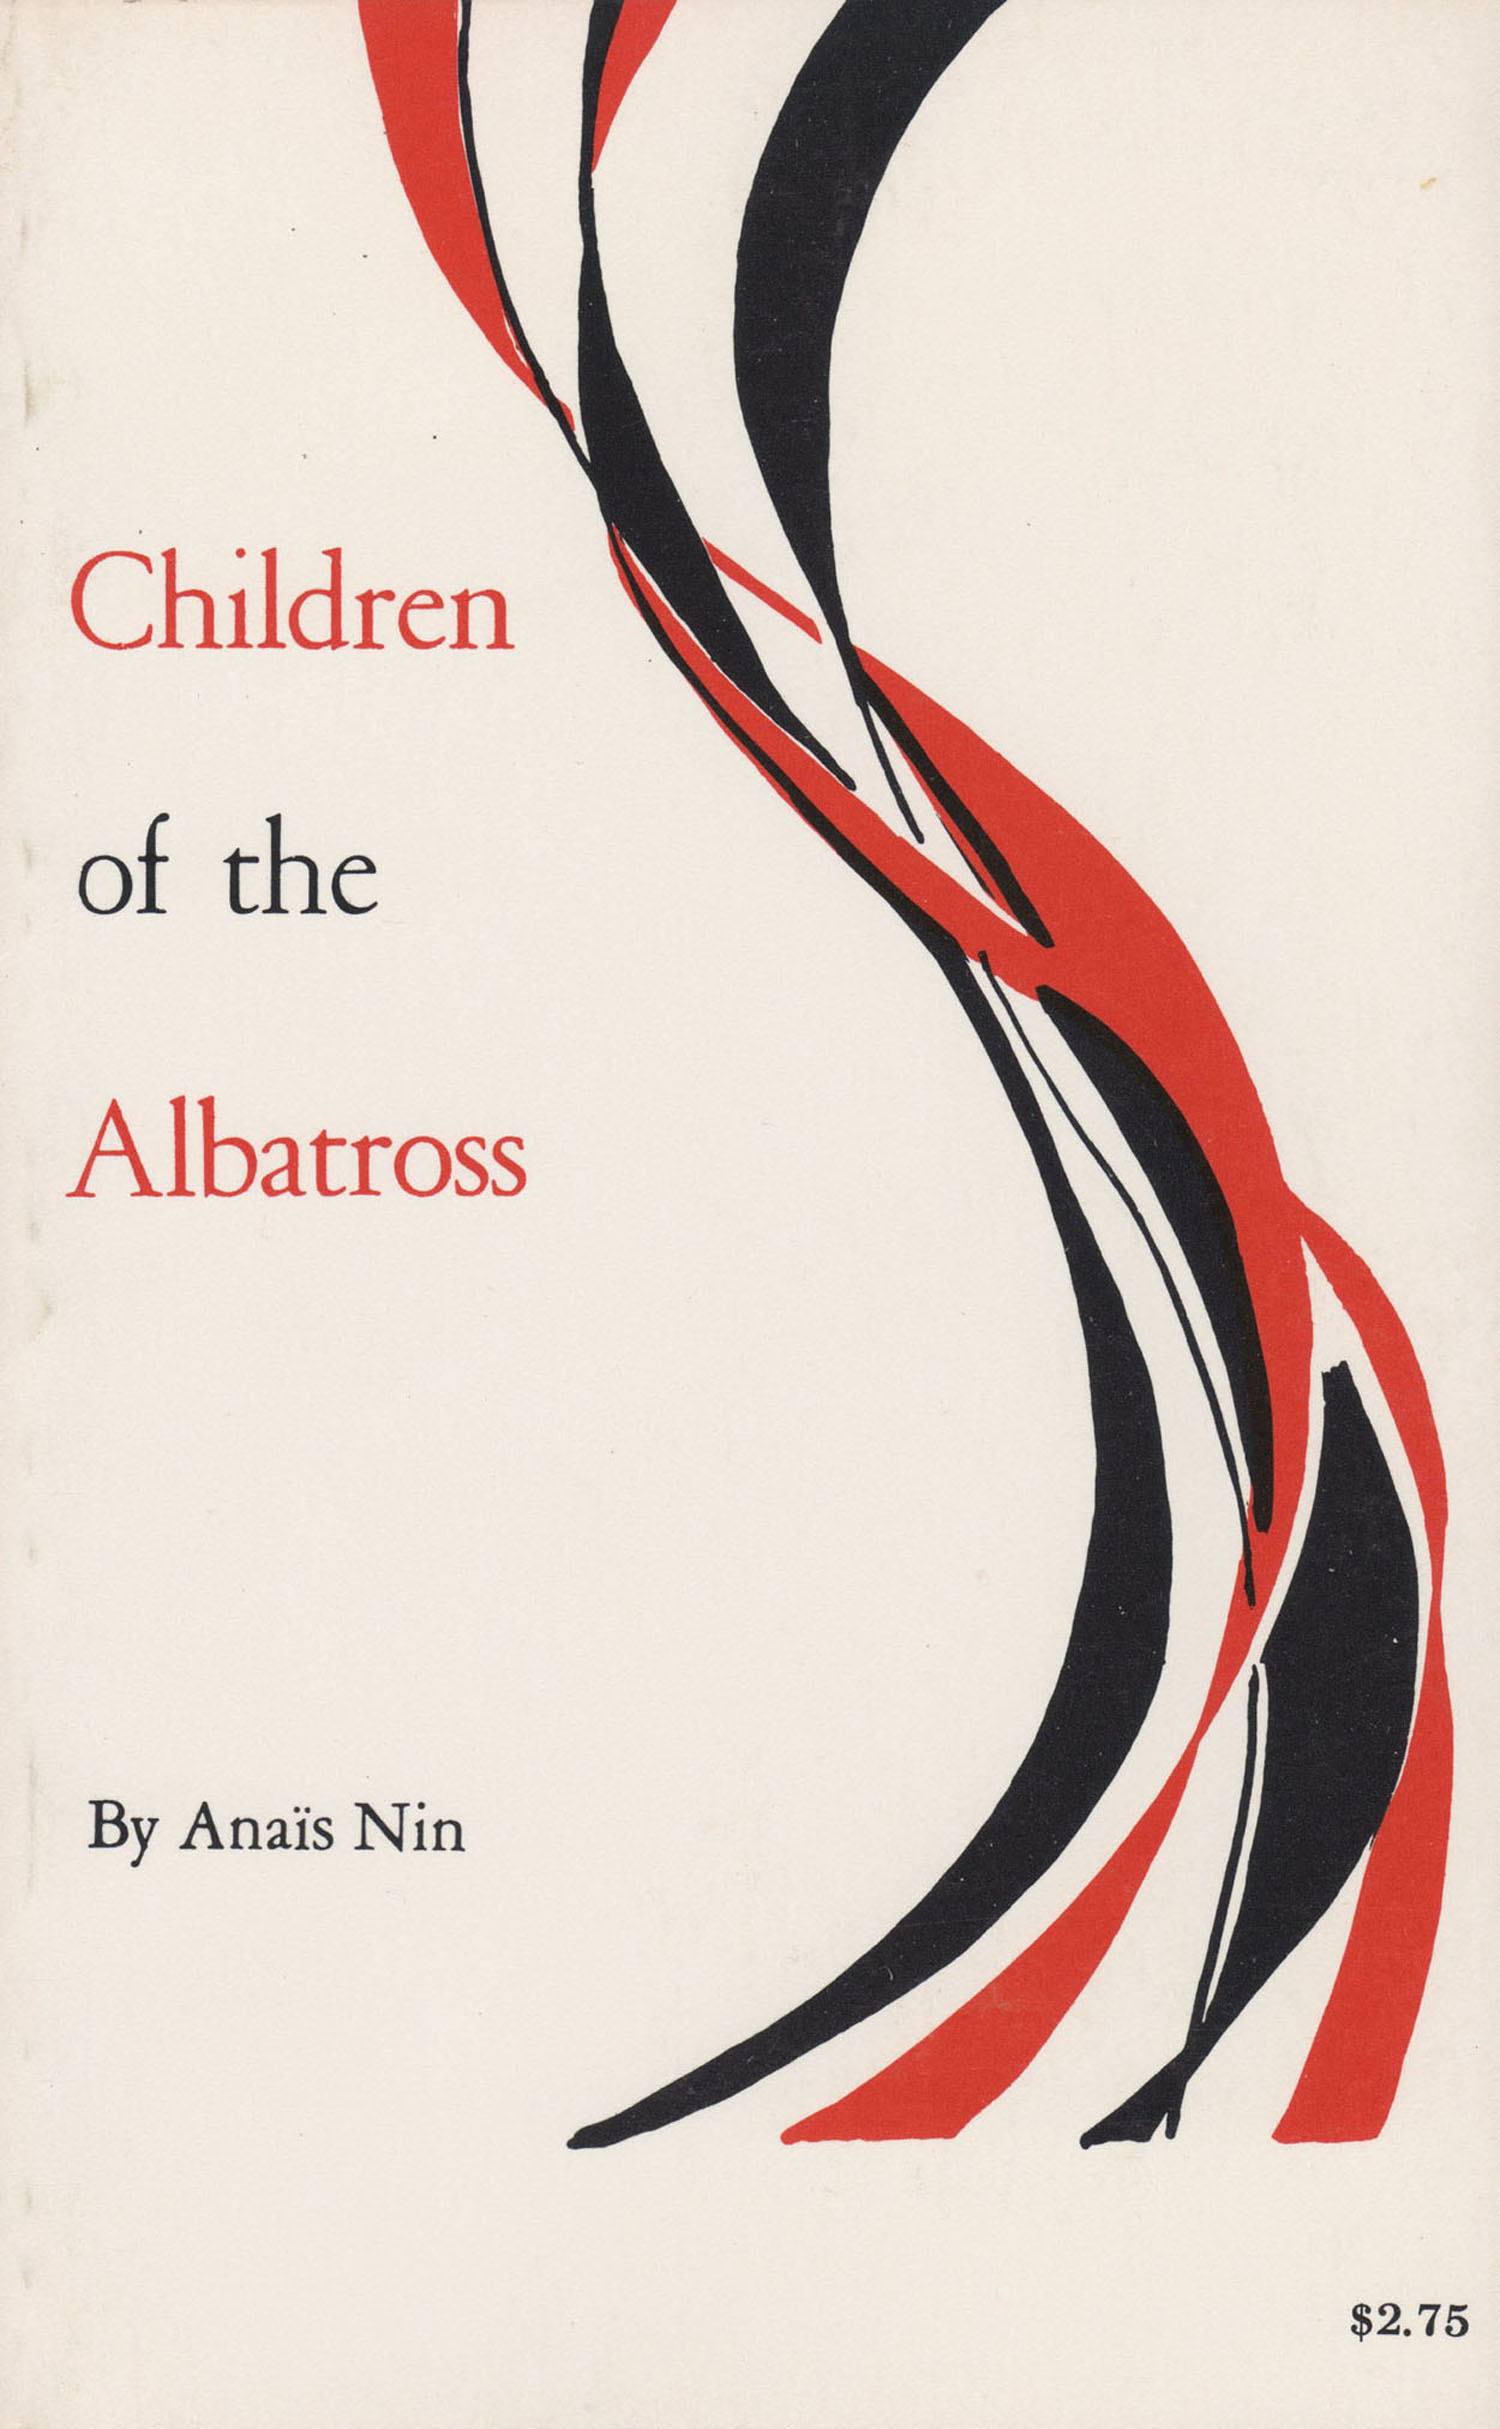 Children of the Albatross